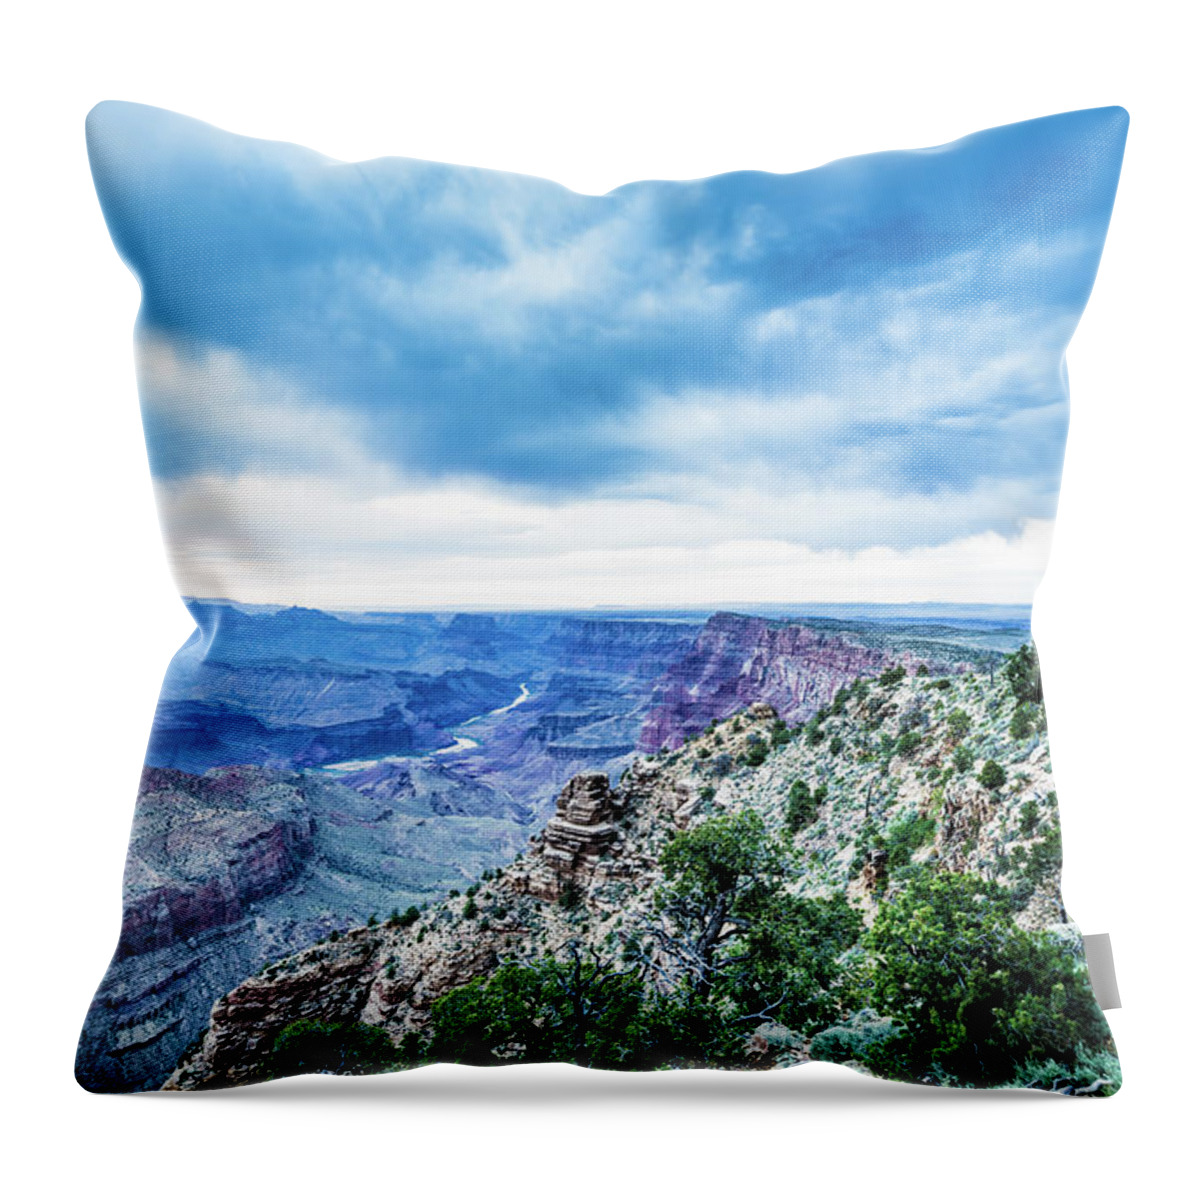 Arizona Throw Pillow featuring the photograph Desert view tower, Grand Canyon by Mati Krimerman